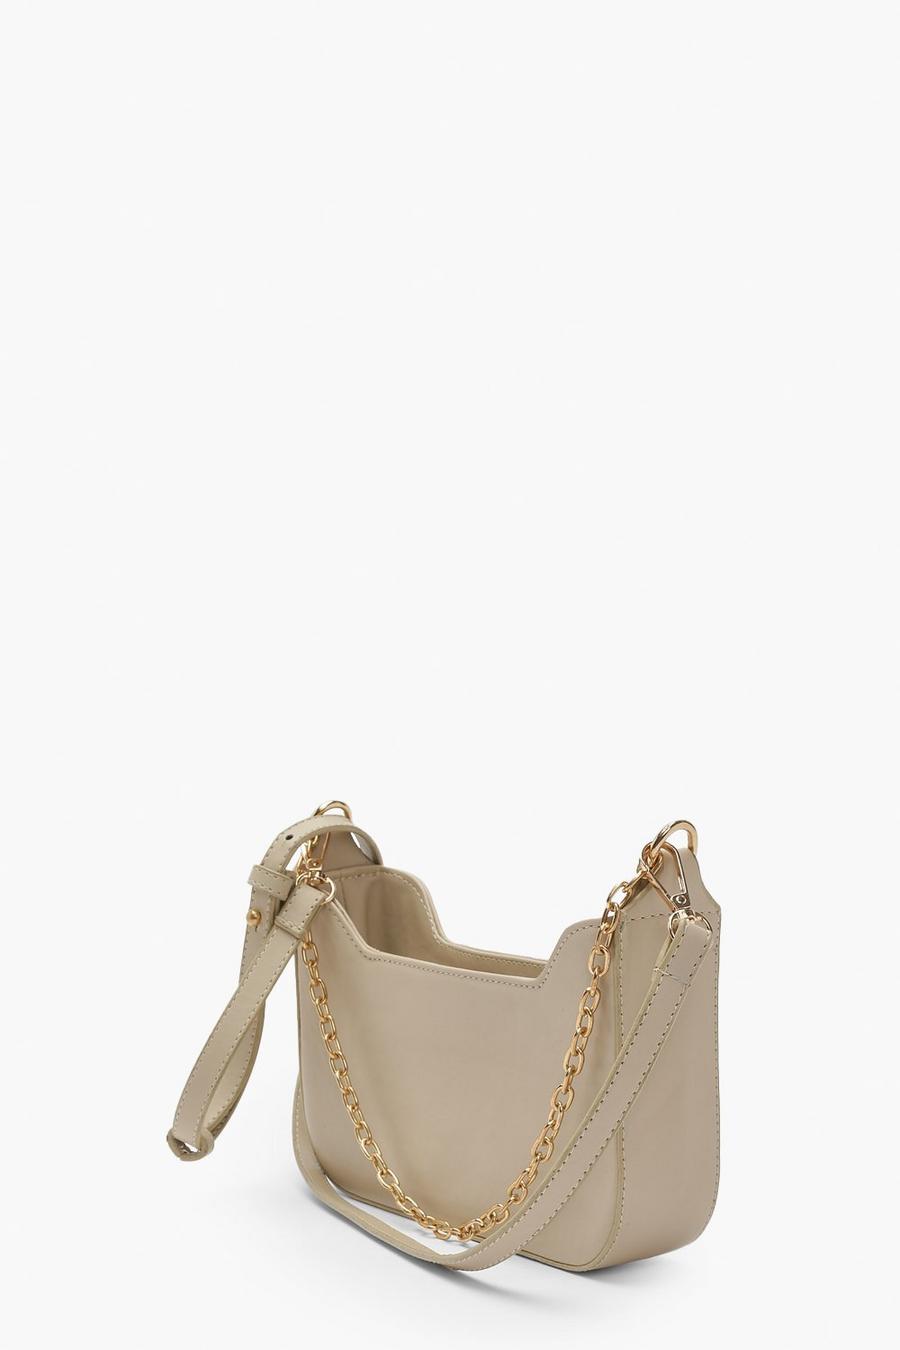 Cream white Chain Shoulder Bag